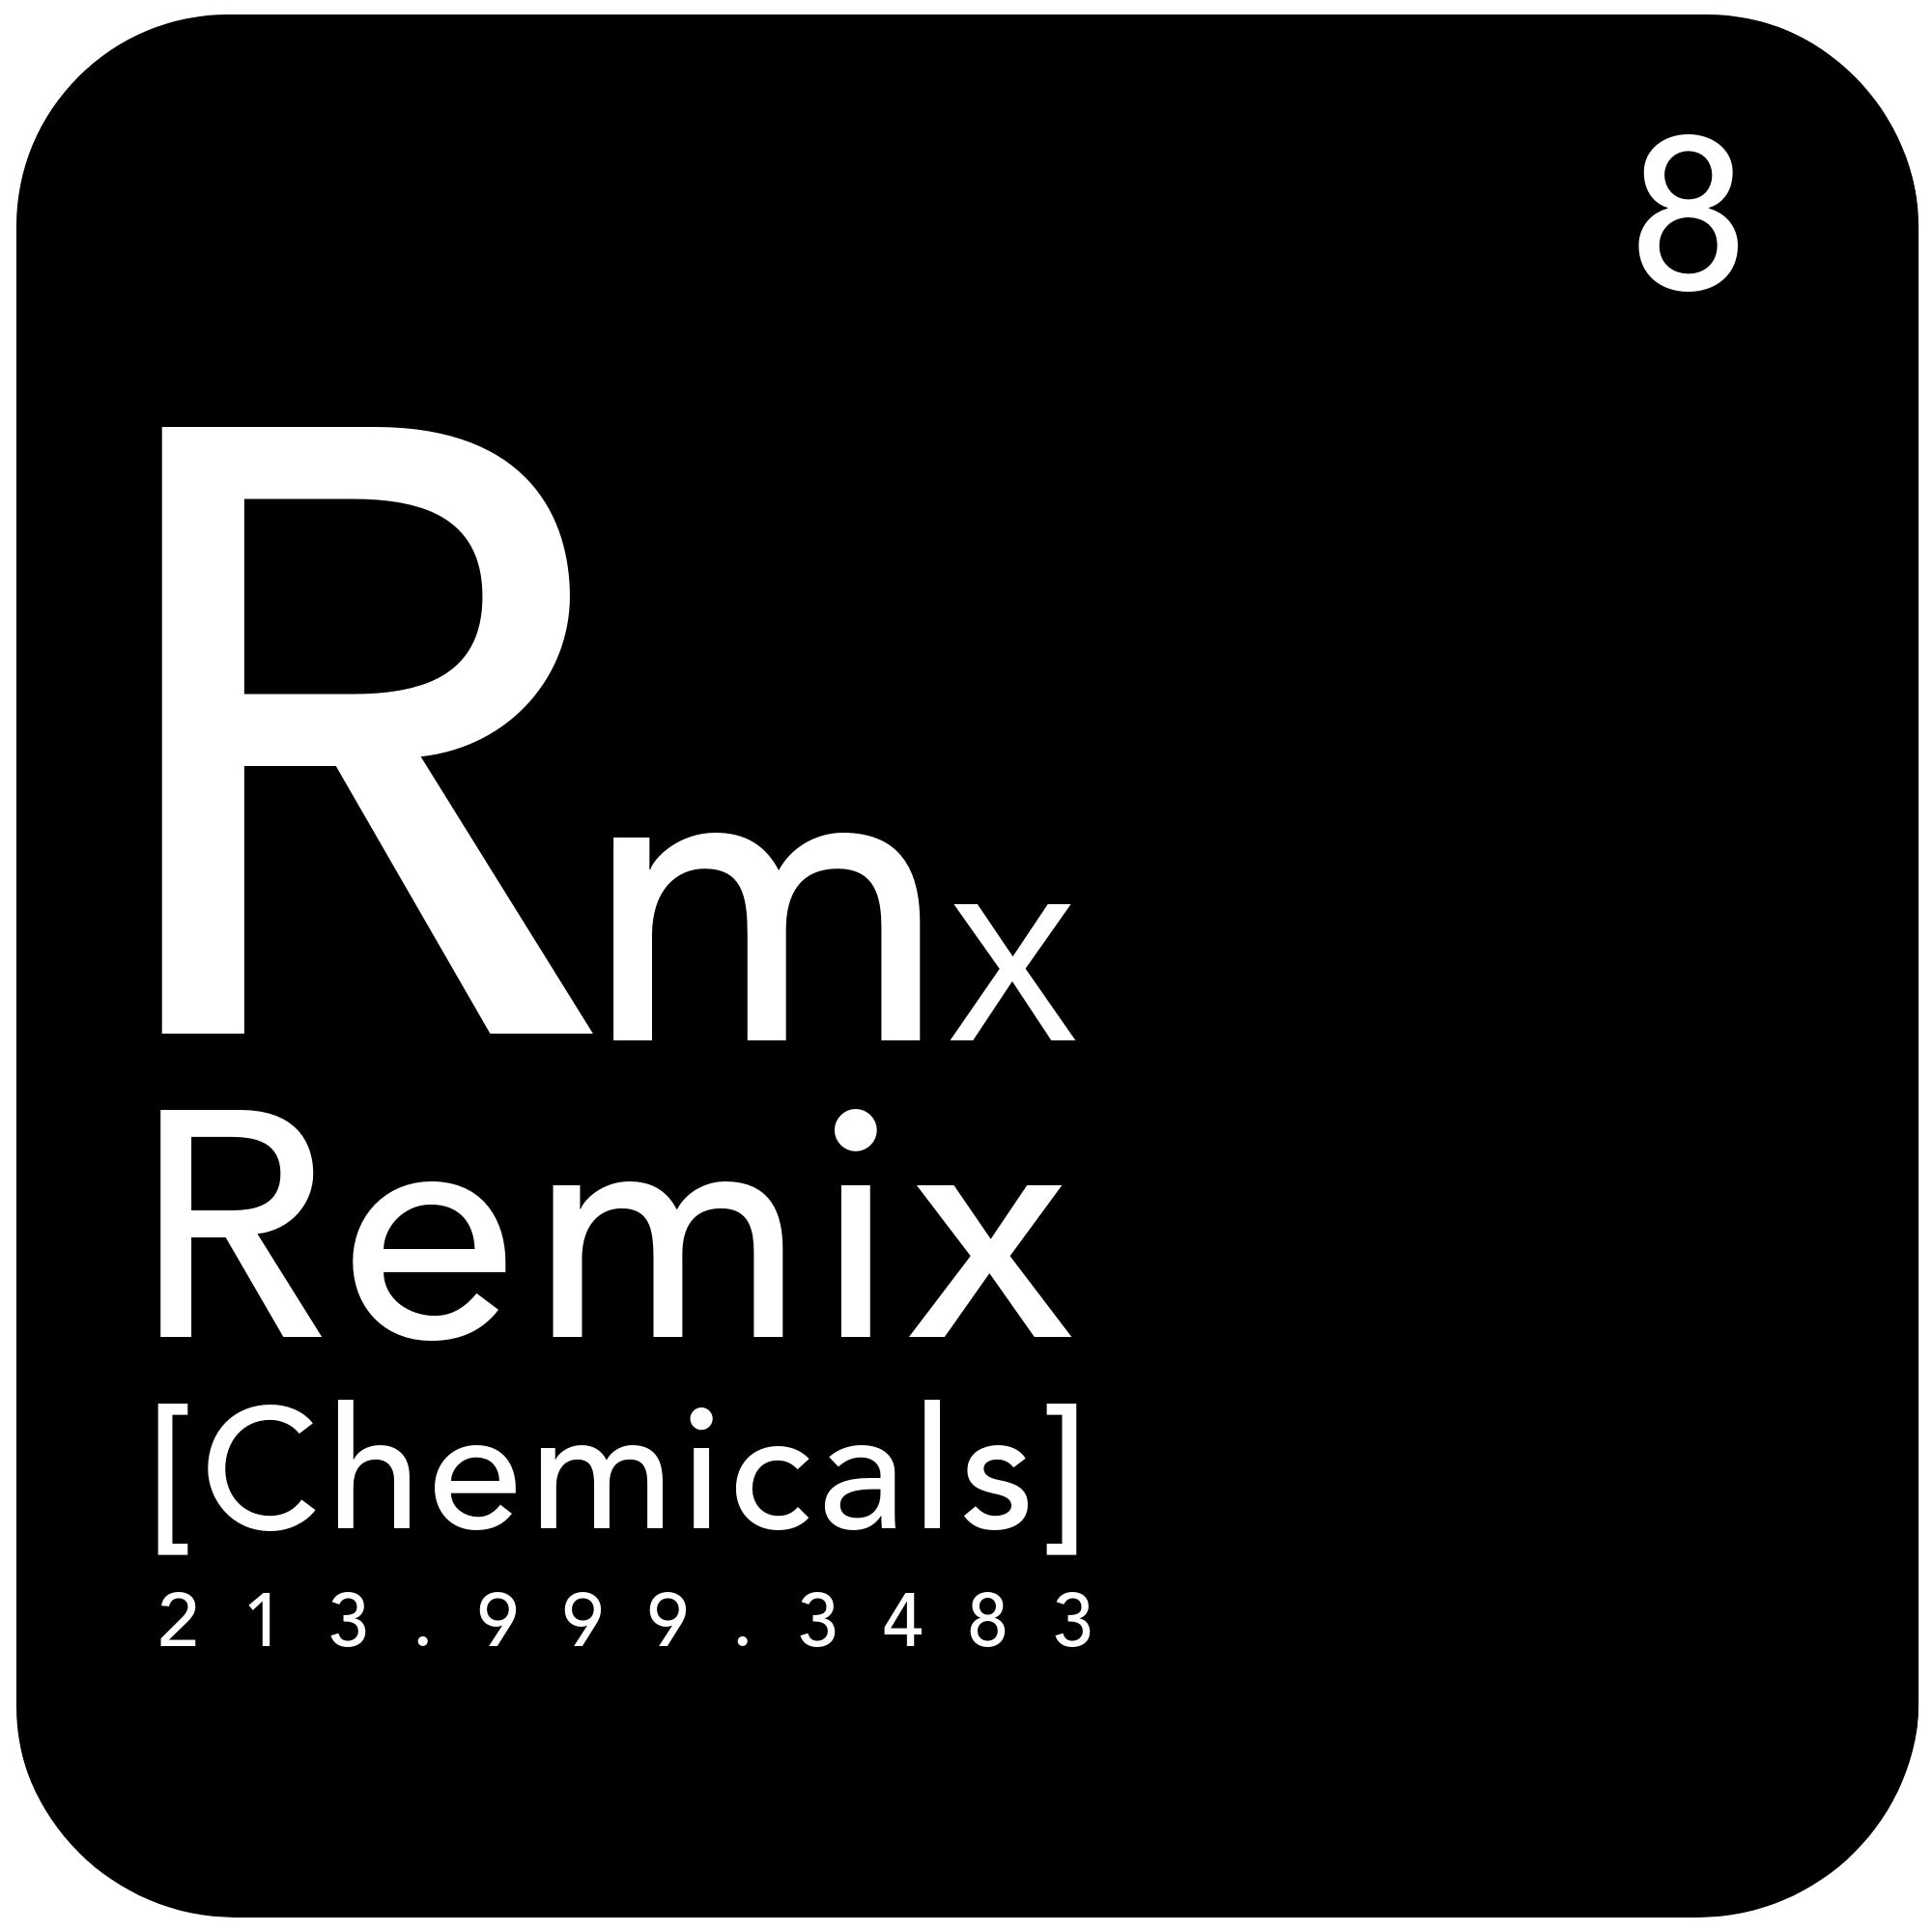 Remix Chemicals